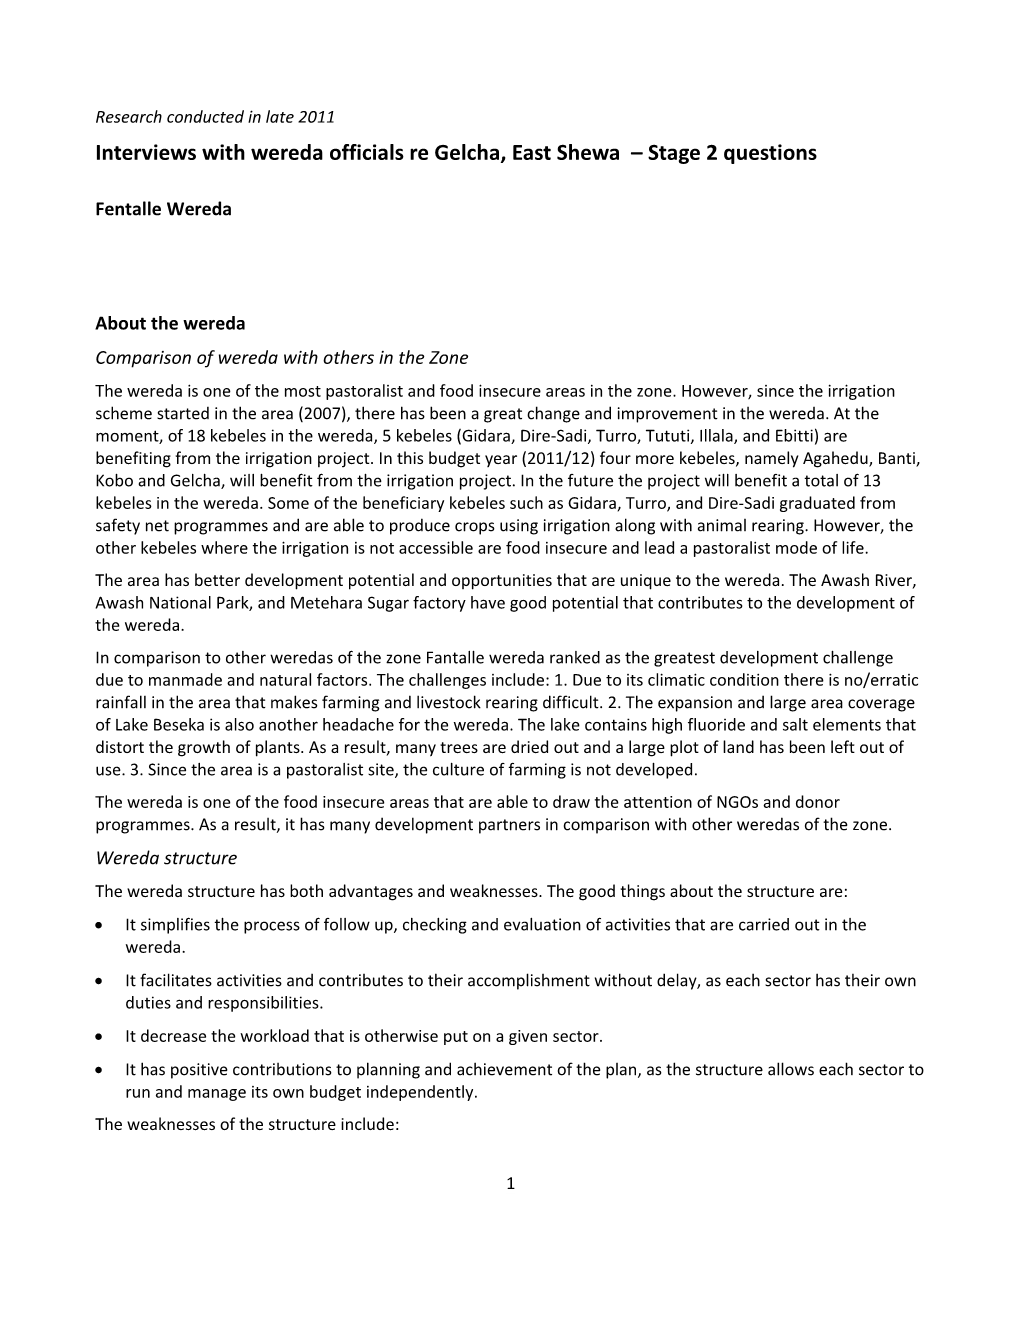 Report Document 1 for Wereda Officials